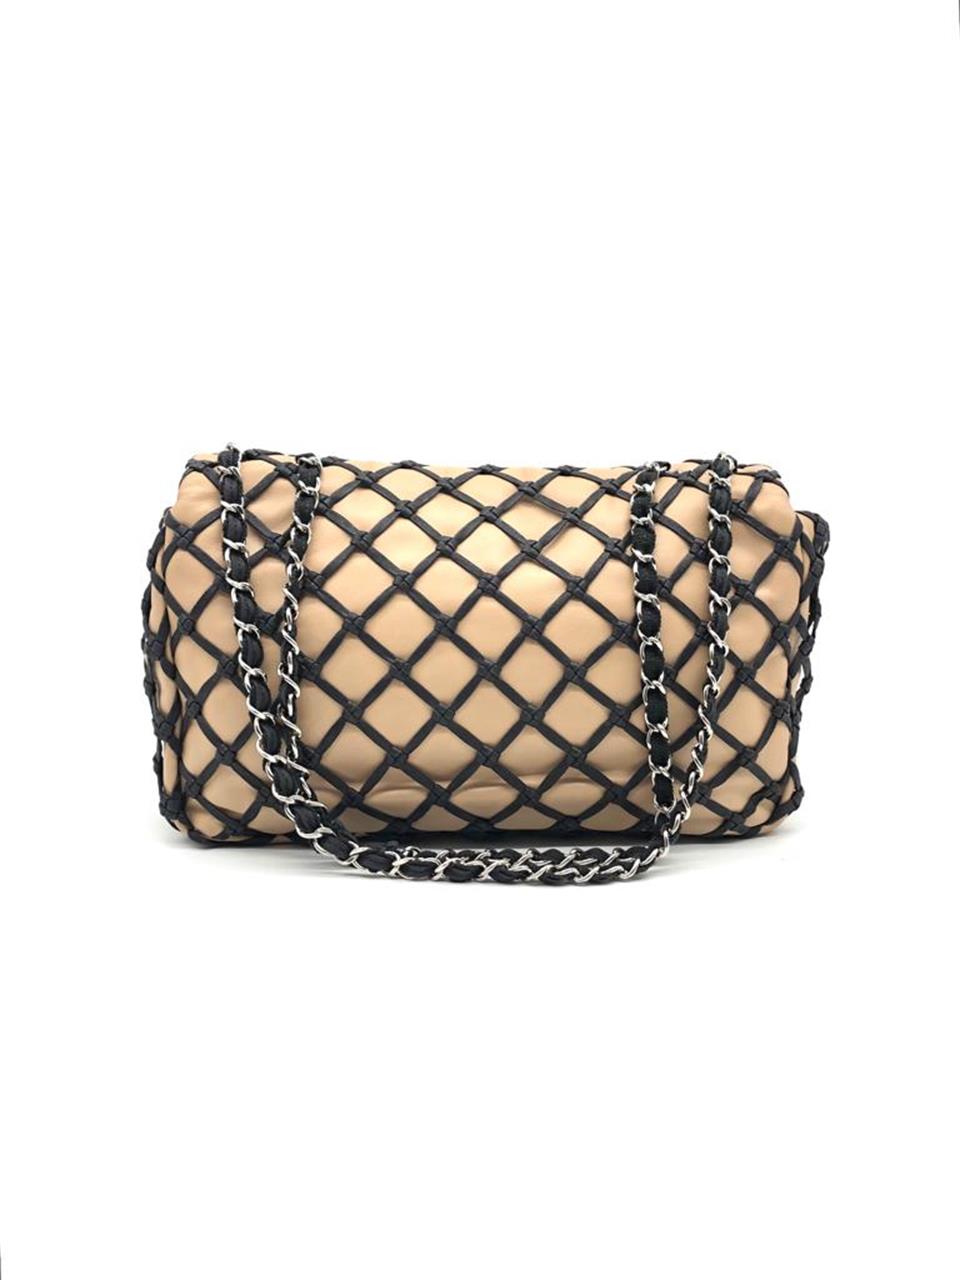 Chanel Beige Black Leather Canebiers Jumbo Flap Bag Deluxe Seconds'ta